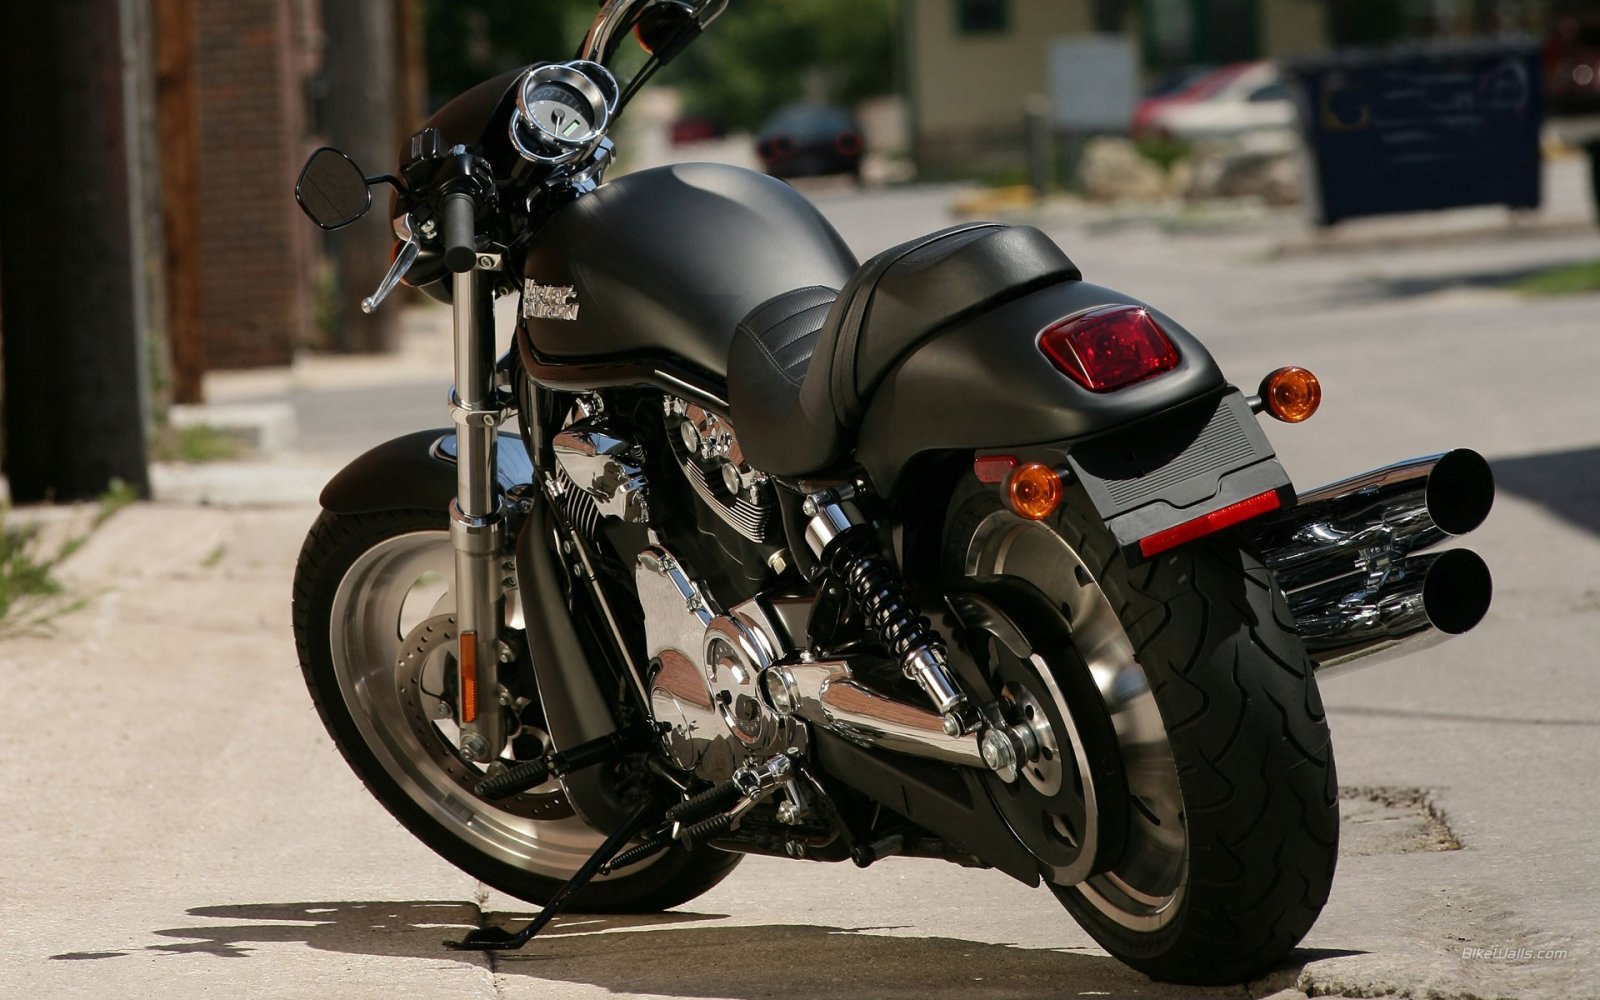  de fotos de motos Harley Davidson Fotos de motos Harley Davidson